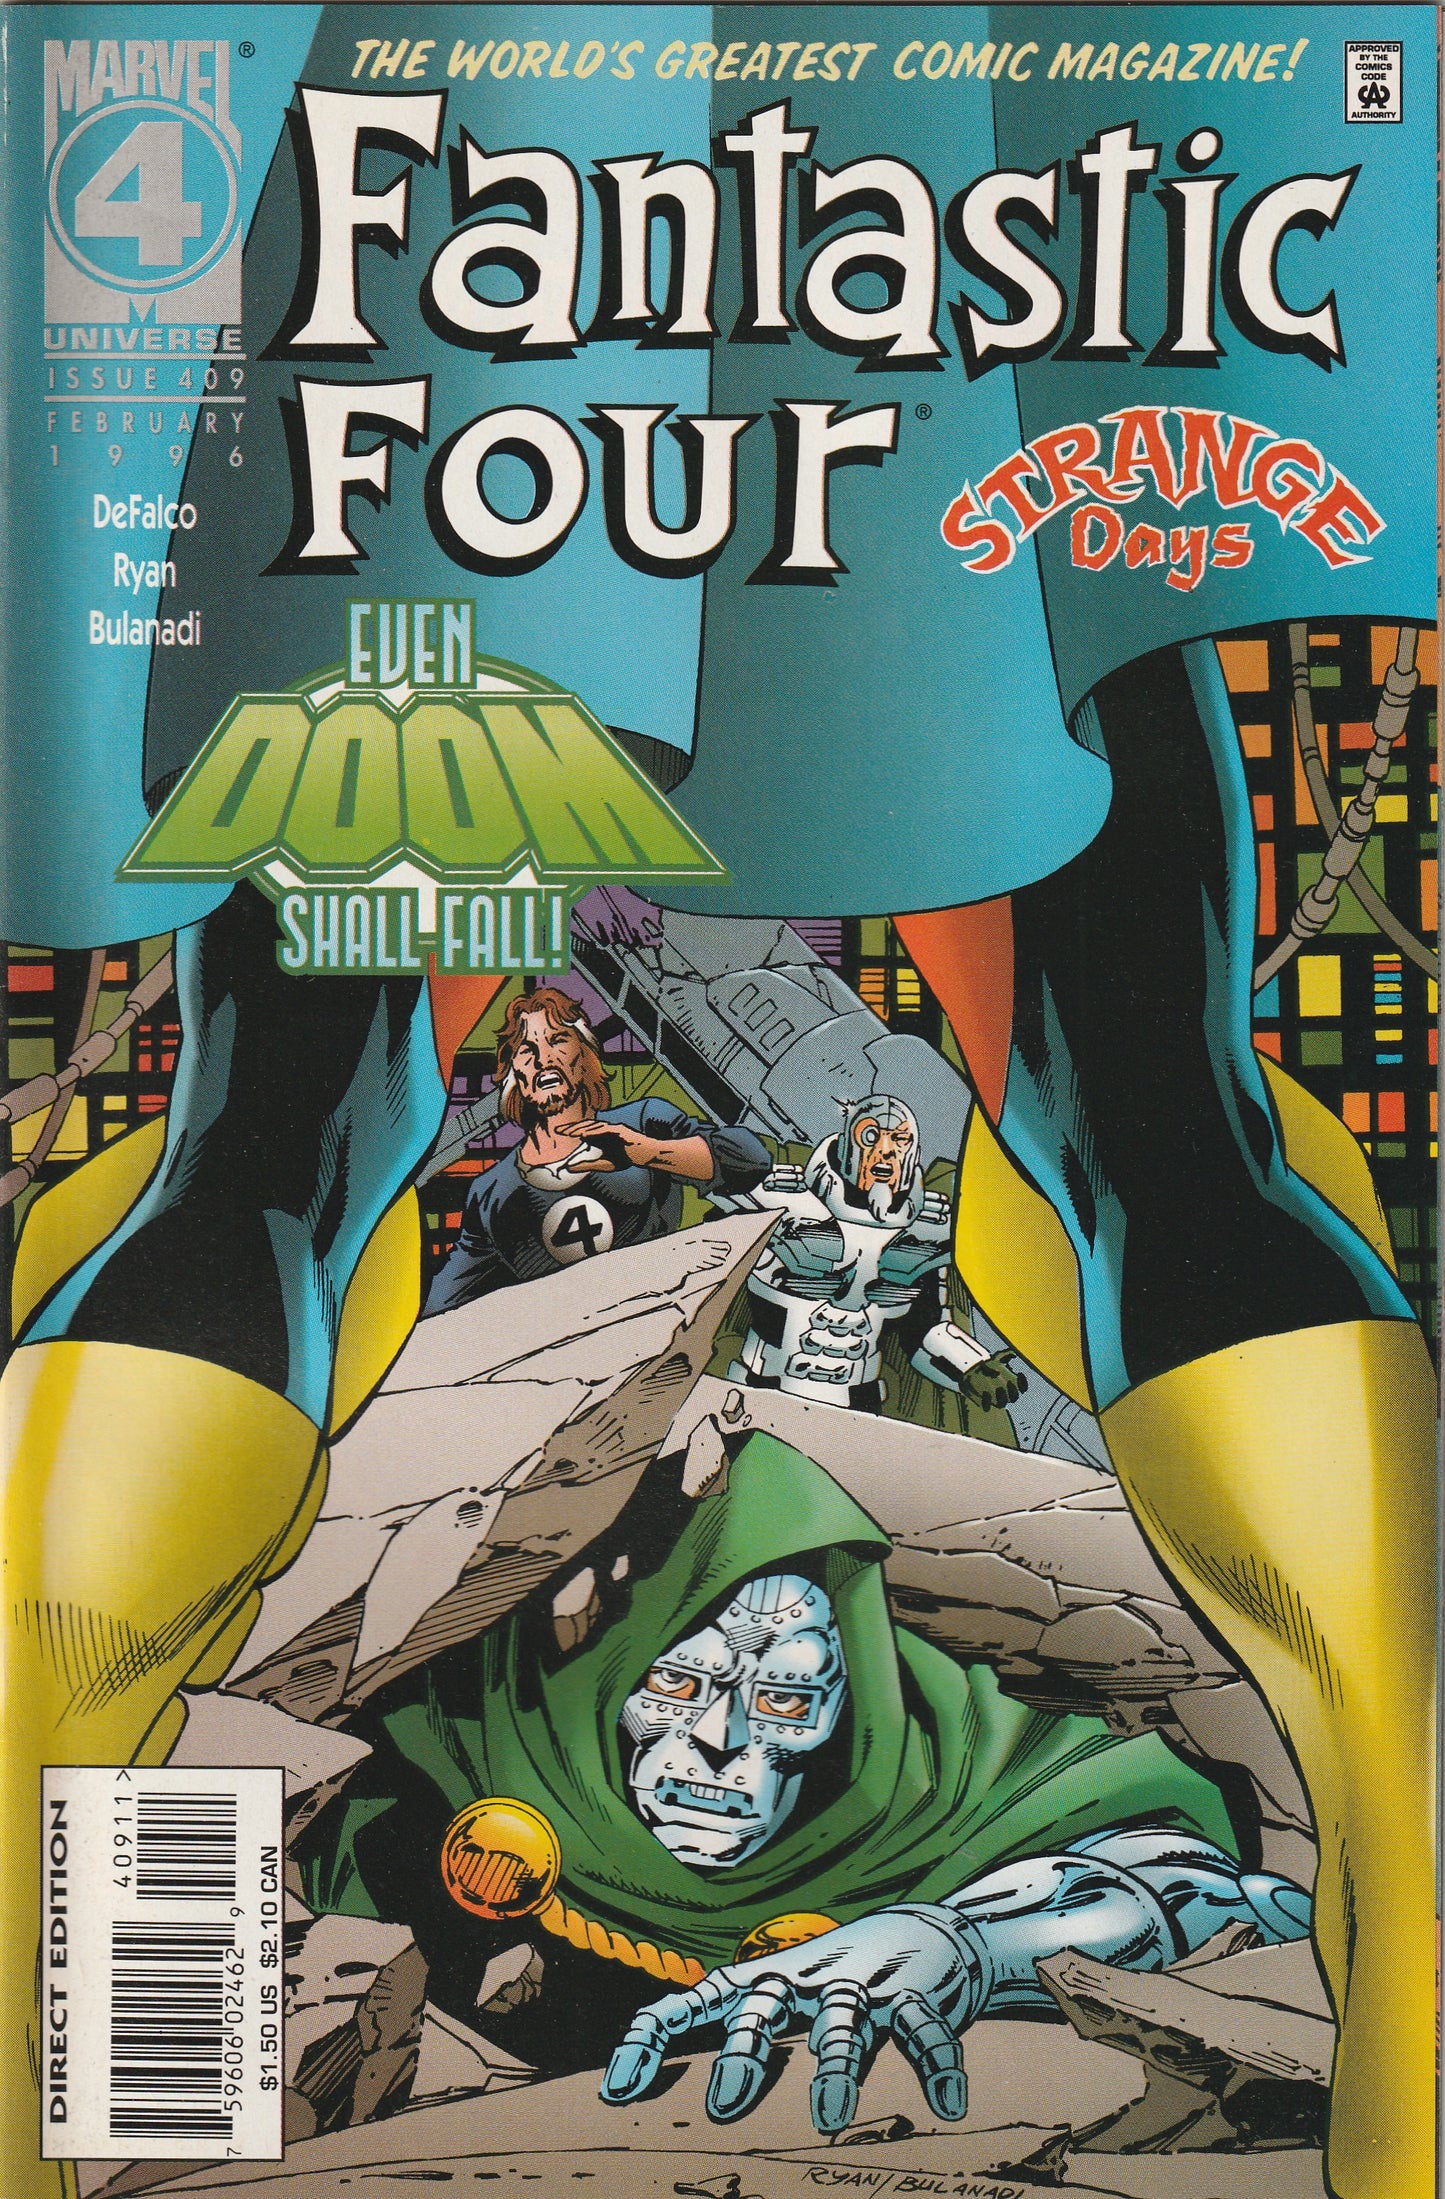 Fantastic Four #409 (1996)